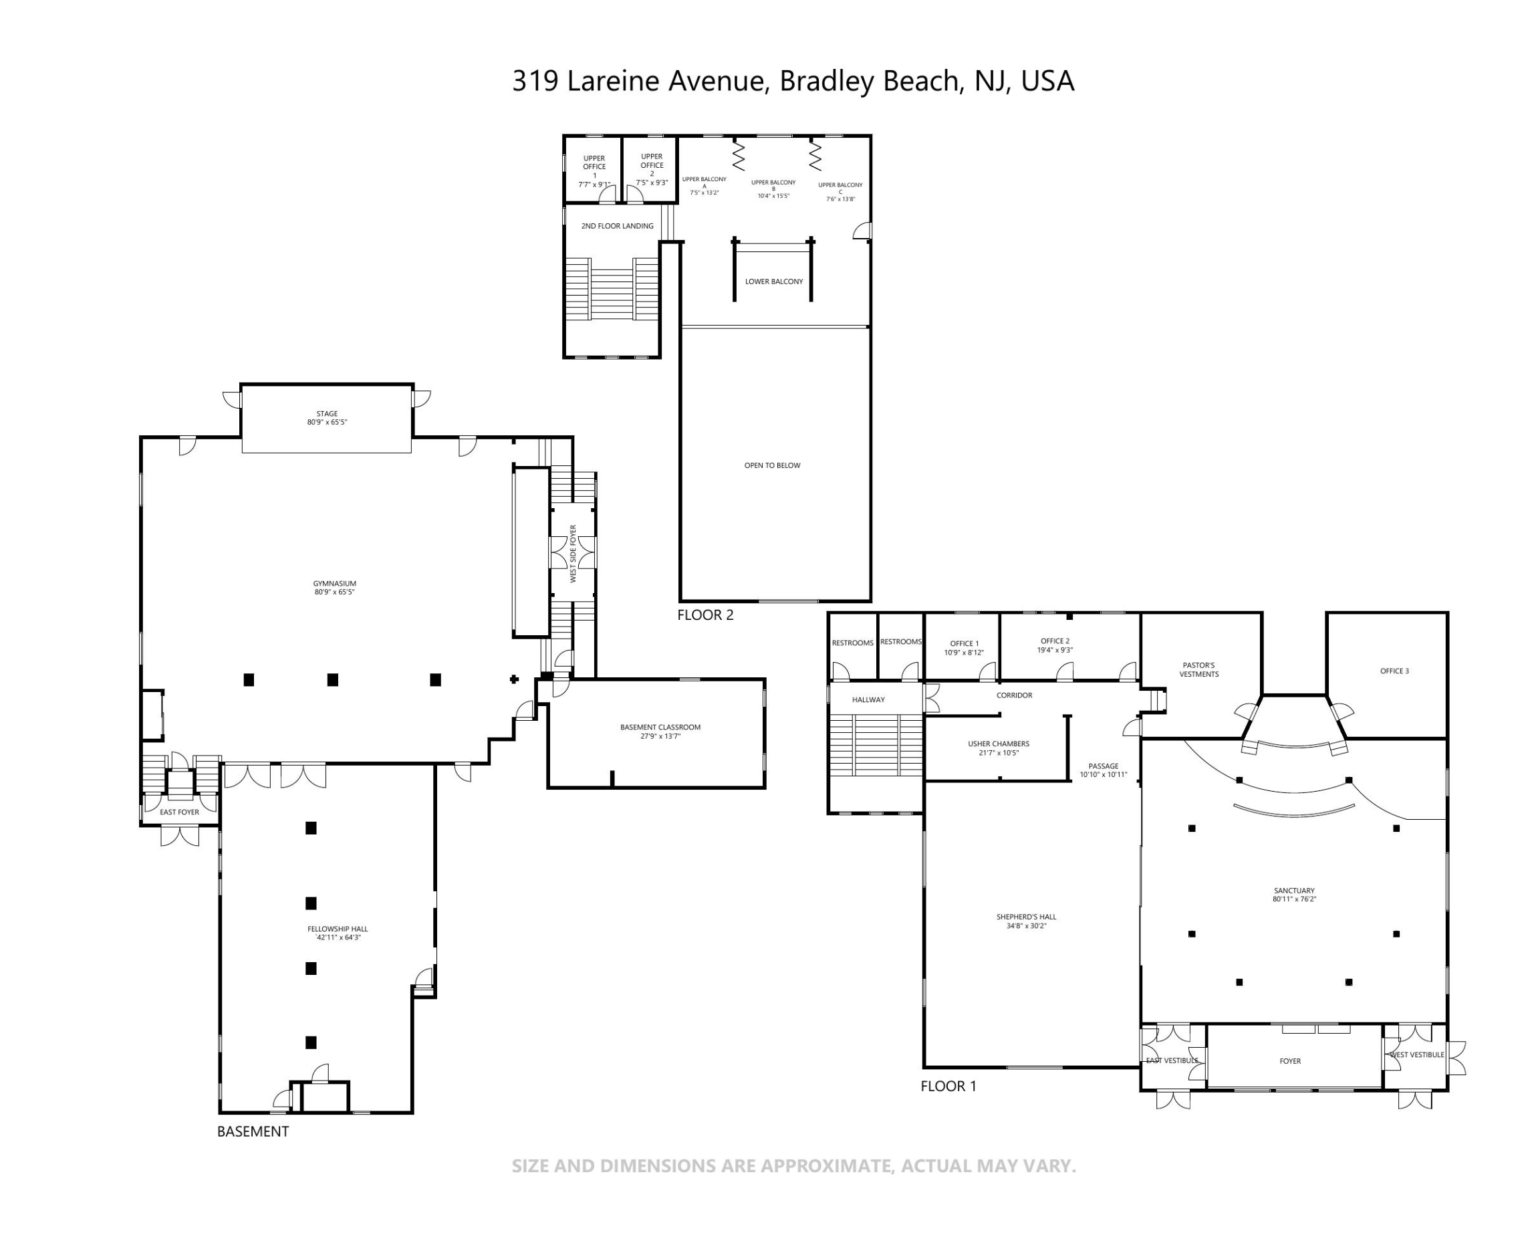 Bradley Beach Methodist Church Floor Plan